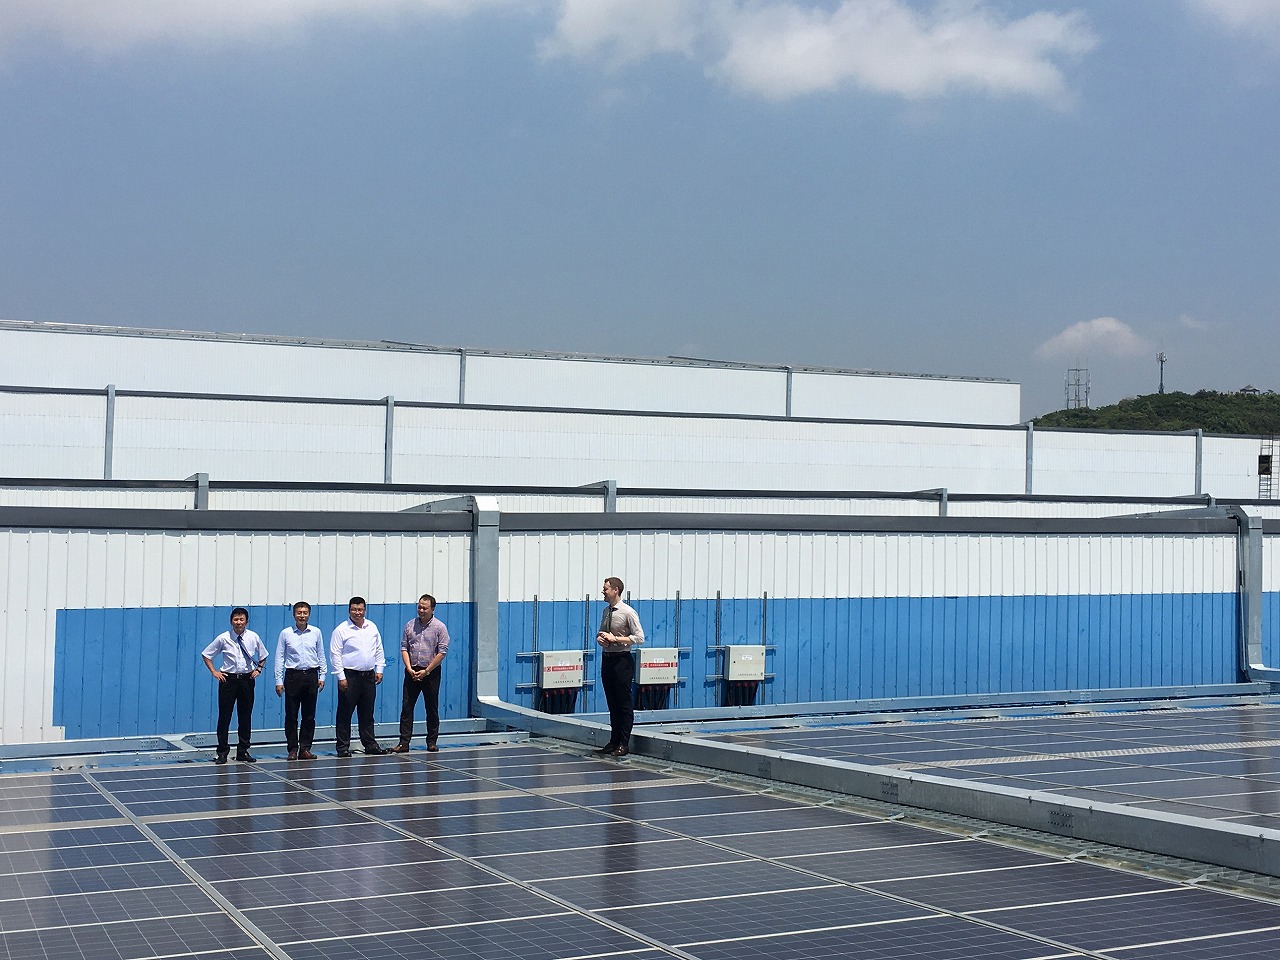 TZS operates world's largest 19MW shipyard solar station